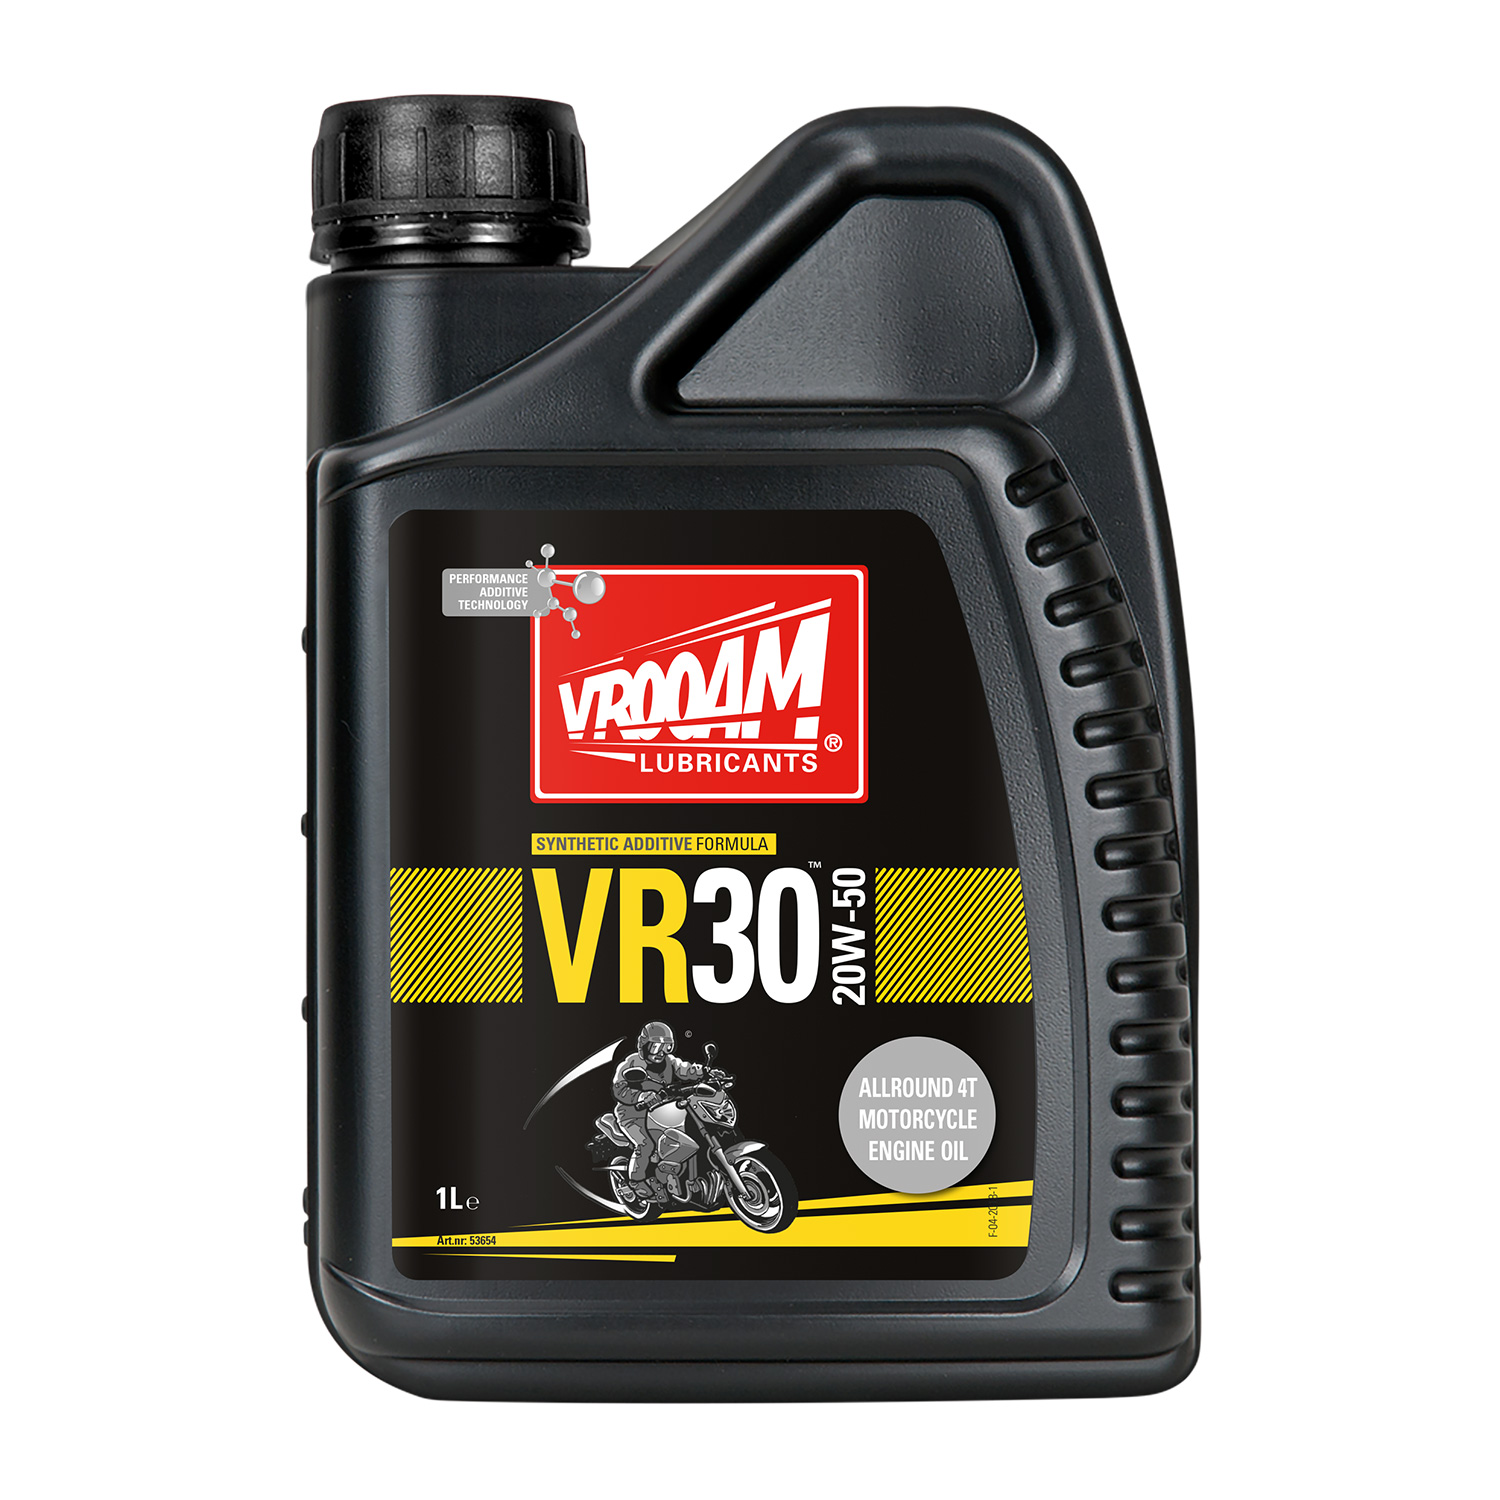 Vrooam VR30 Engine Oil 20W-50 1 L Size